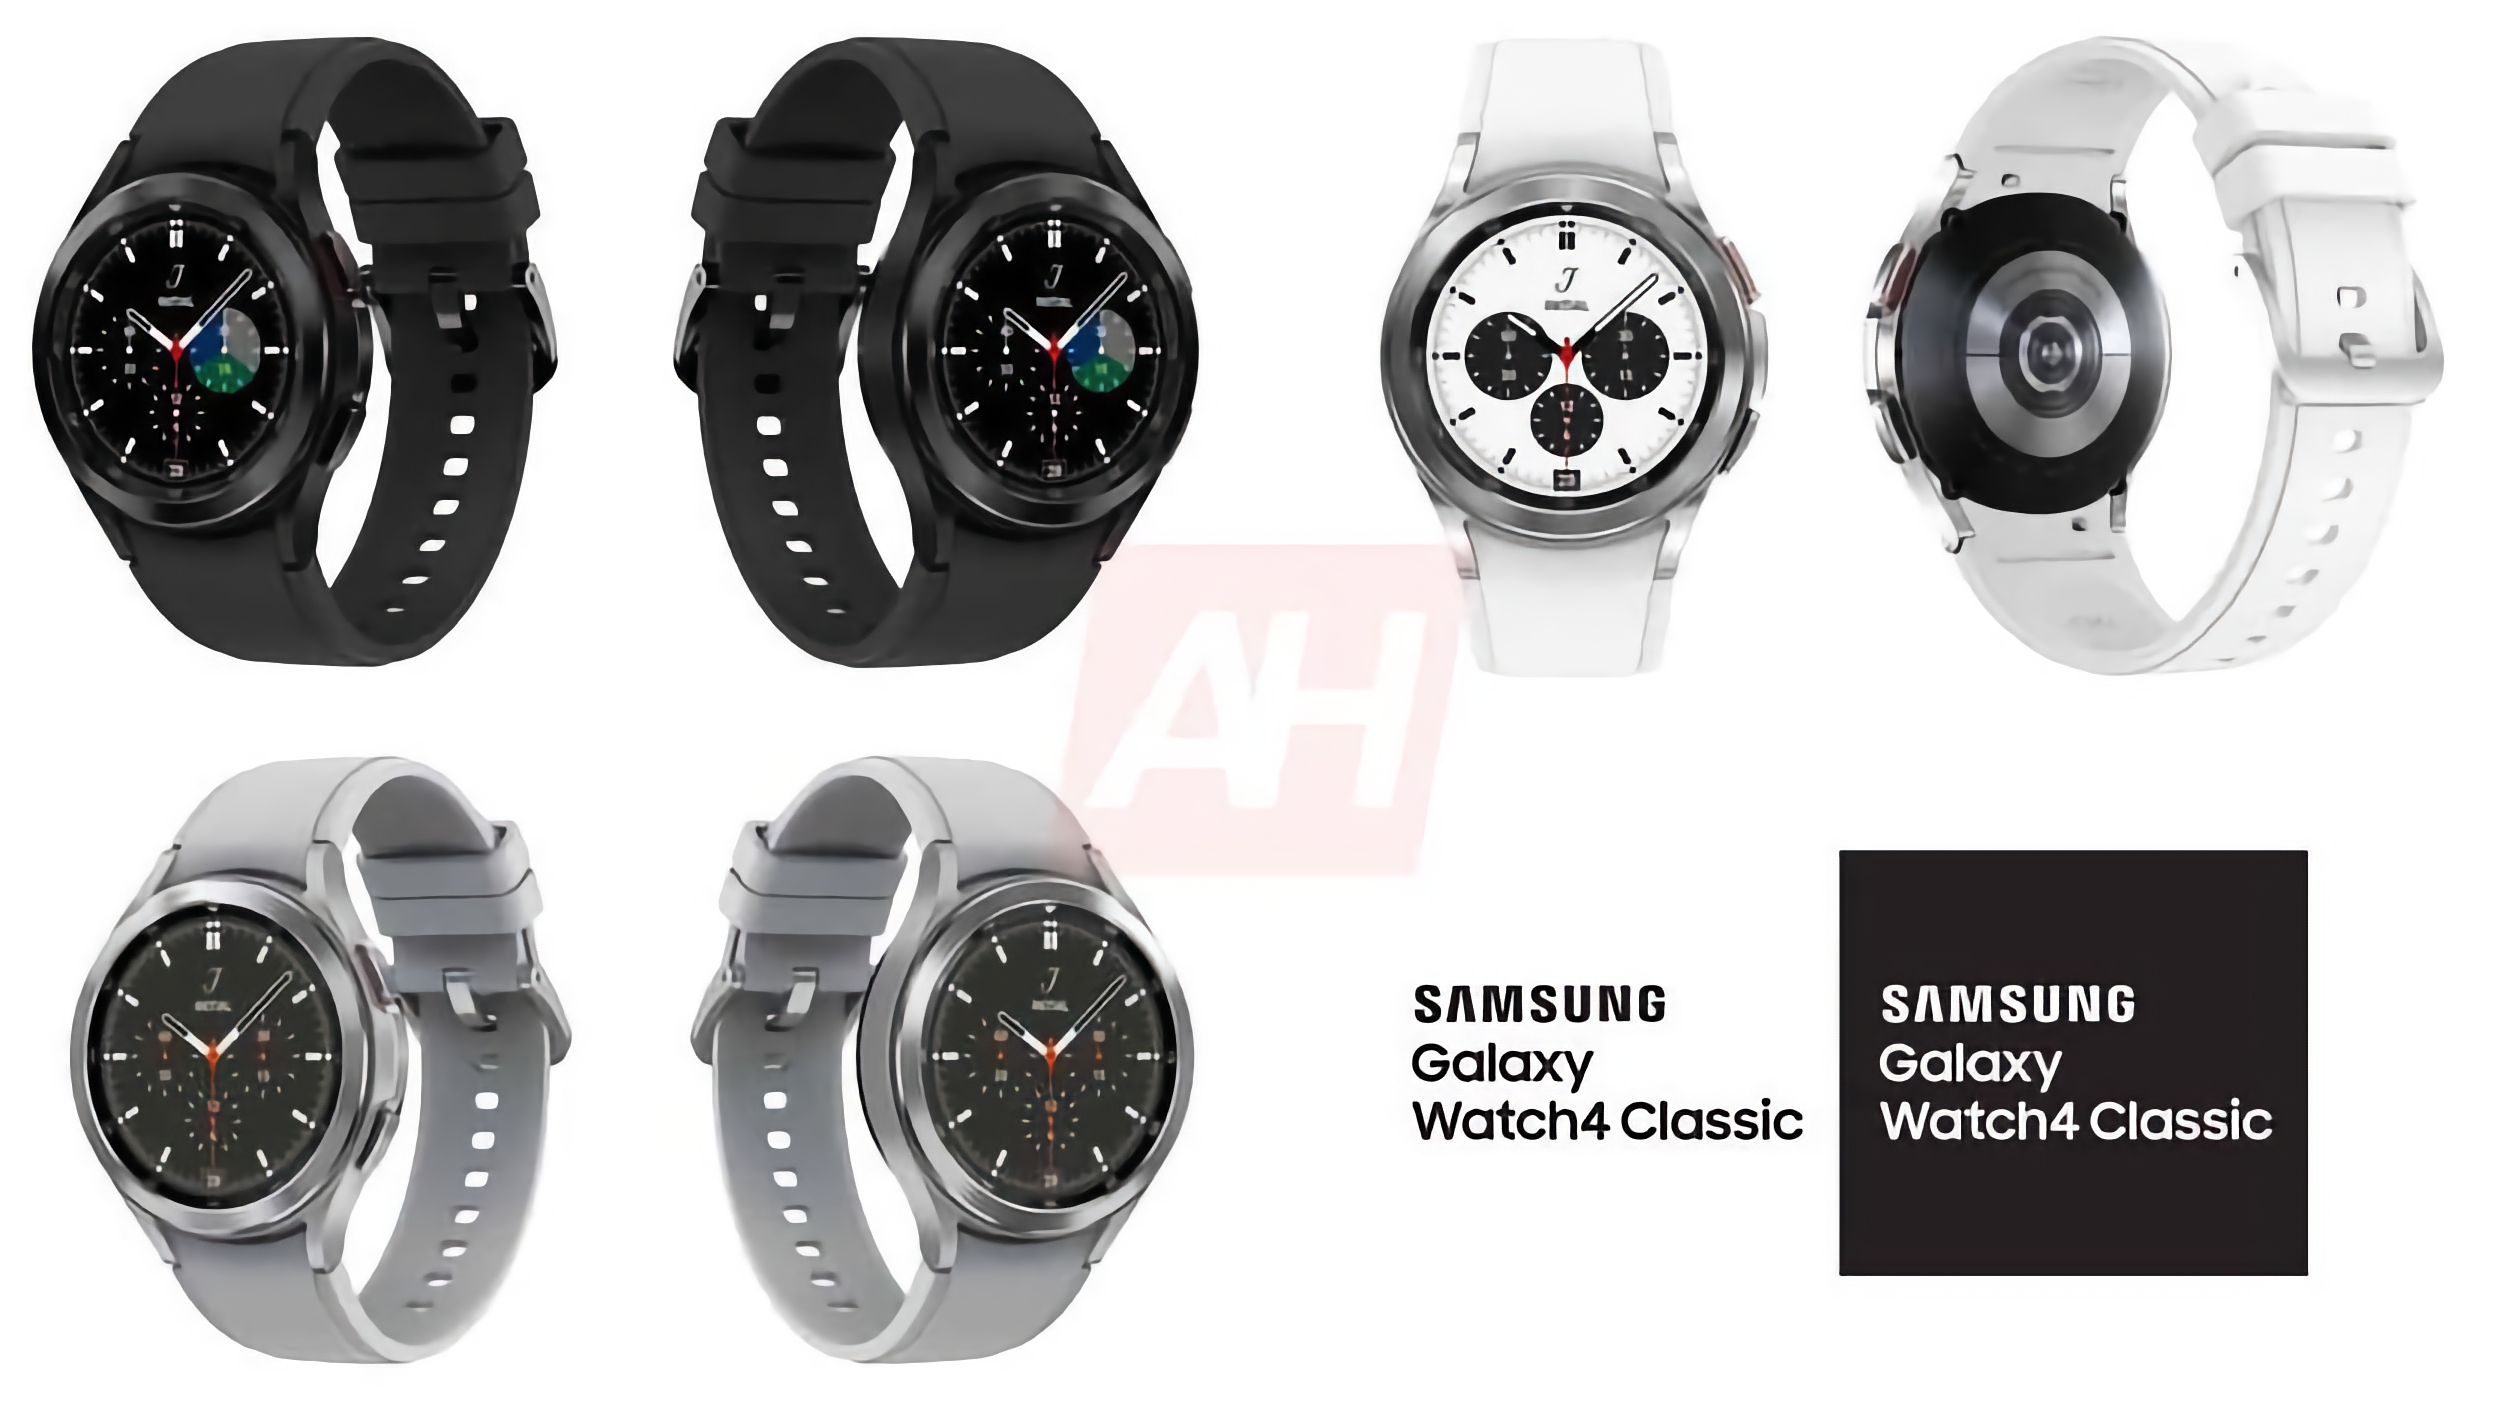 Telegram samsung watch. Samsung Galaxy watch 4 Classic 46mm Price. Часы Samsung Galaxy watch 4 Classic. Самсунг гелакси фотч 4. Часы самсунг галакси вотч 4 46мм.